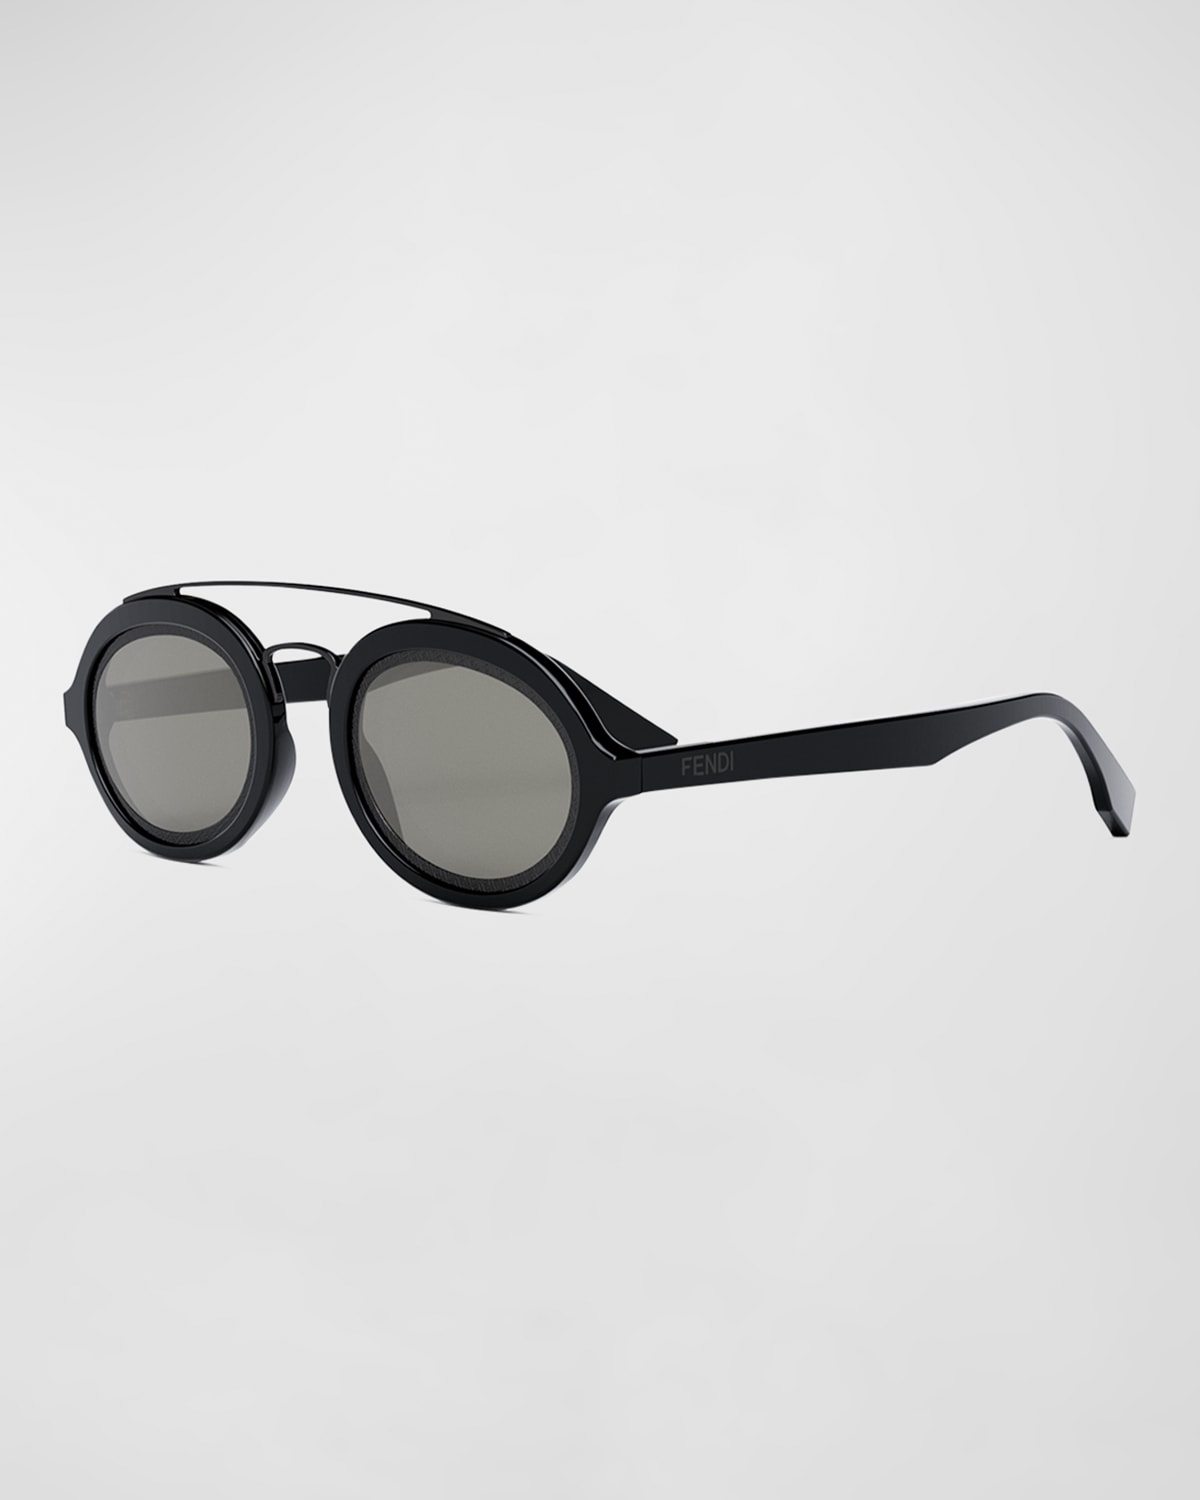 Fendi Men's Acetate Double-bridge Oval Sunglasses In Shiny Black Smoke